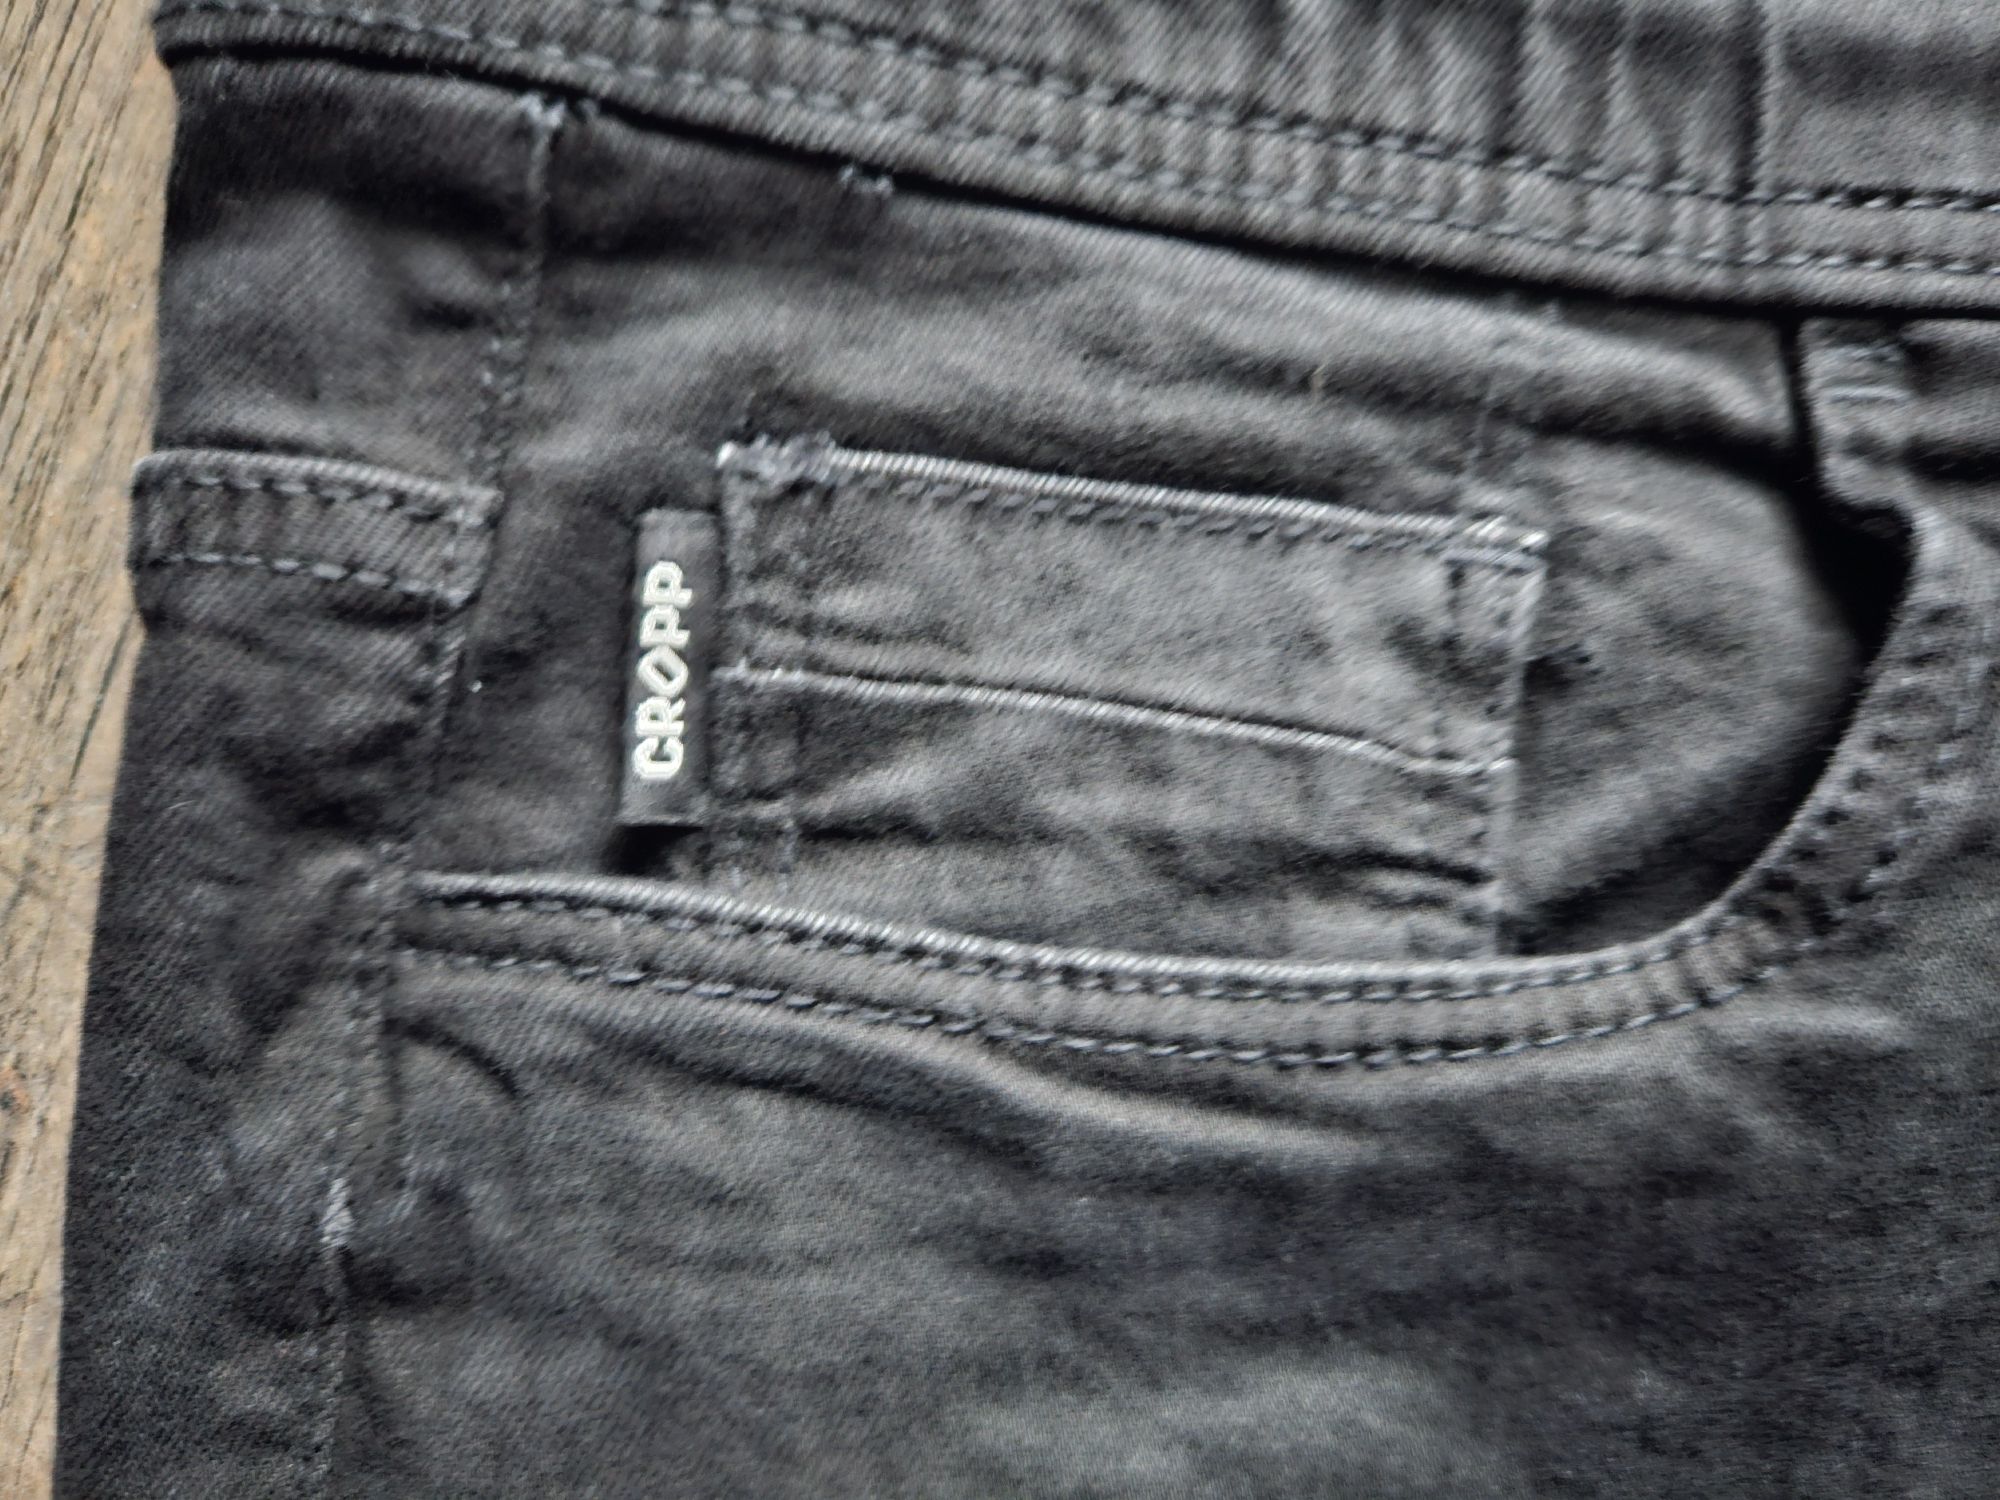 Cropp jeansy czarne r L W 34 L 32 joggery stan jak nowe